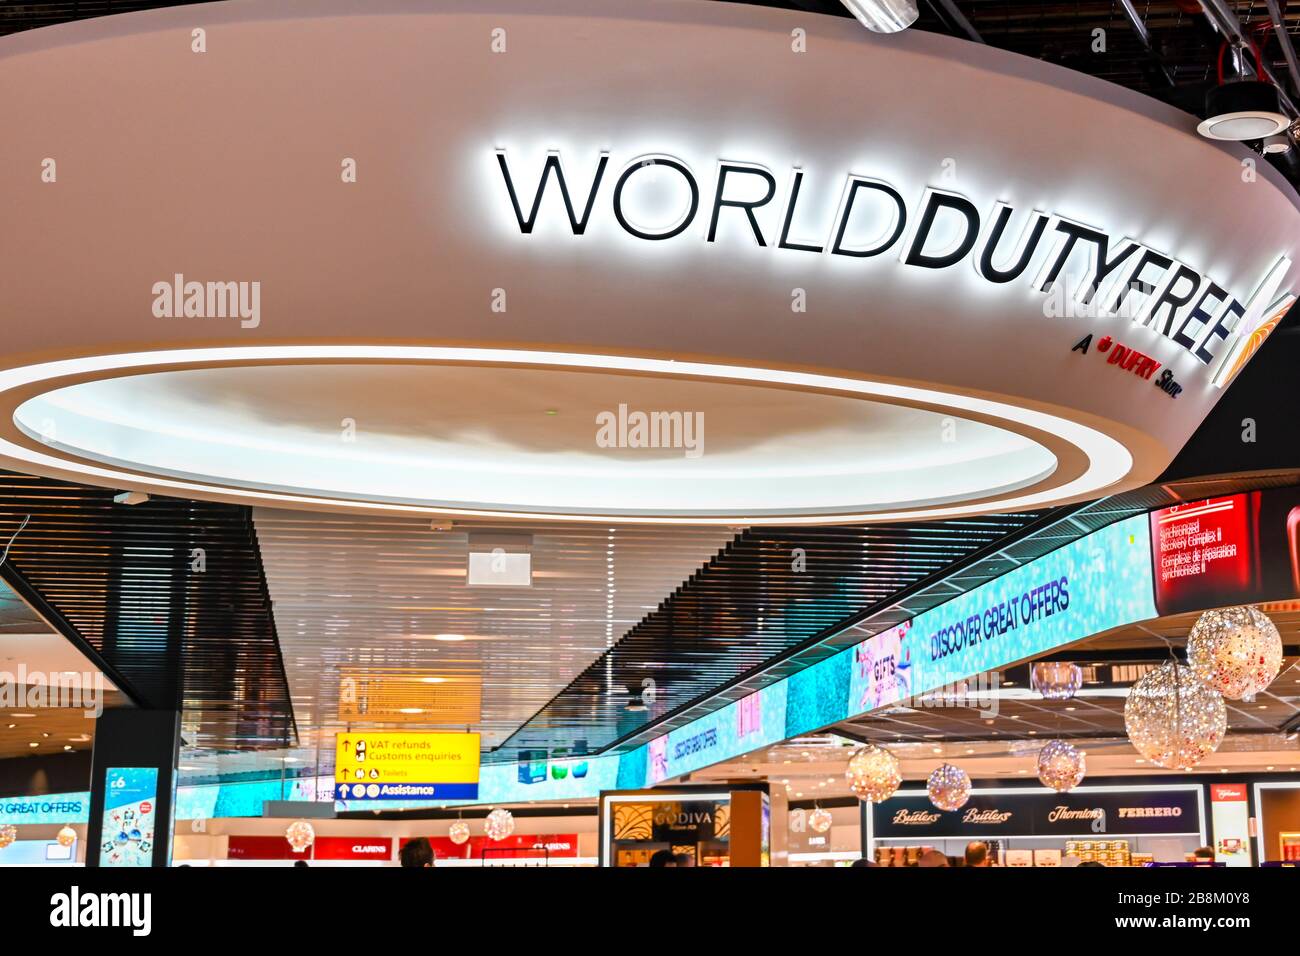 LONDON HEATHROW AIRPORT, ENGLAND - NOVEMBER 2019: Illuminated sign above the World Duty Free shop in Terminal 3 of London Heathrow Airport. Stock Photo